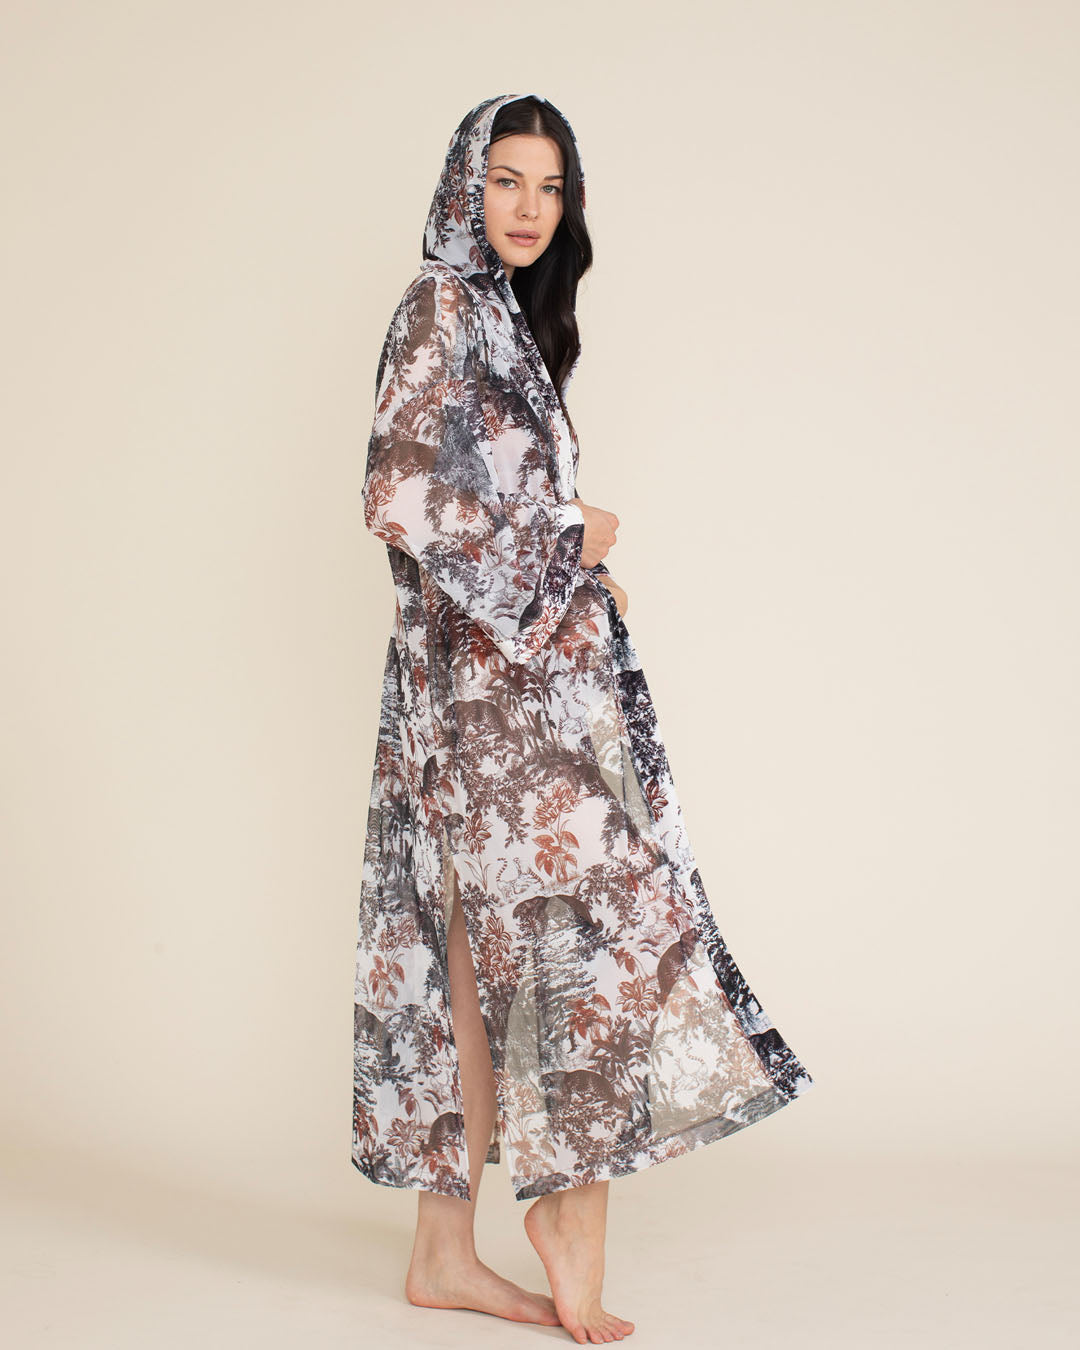 Leopard Toile Hooded Mesh Kimono | Women's